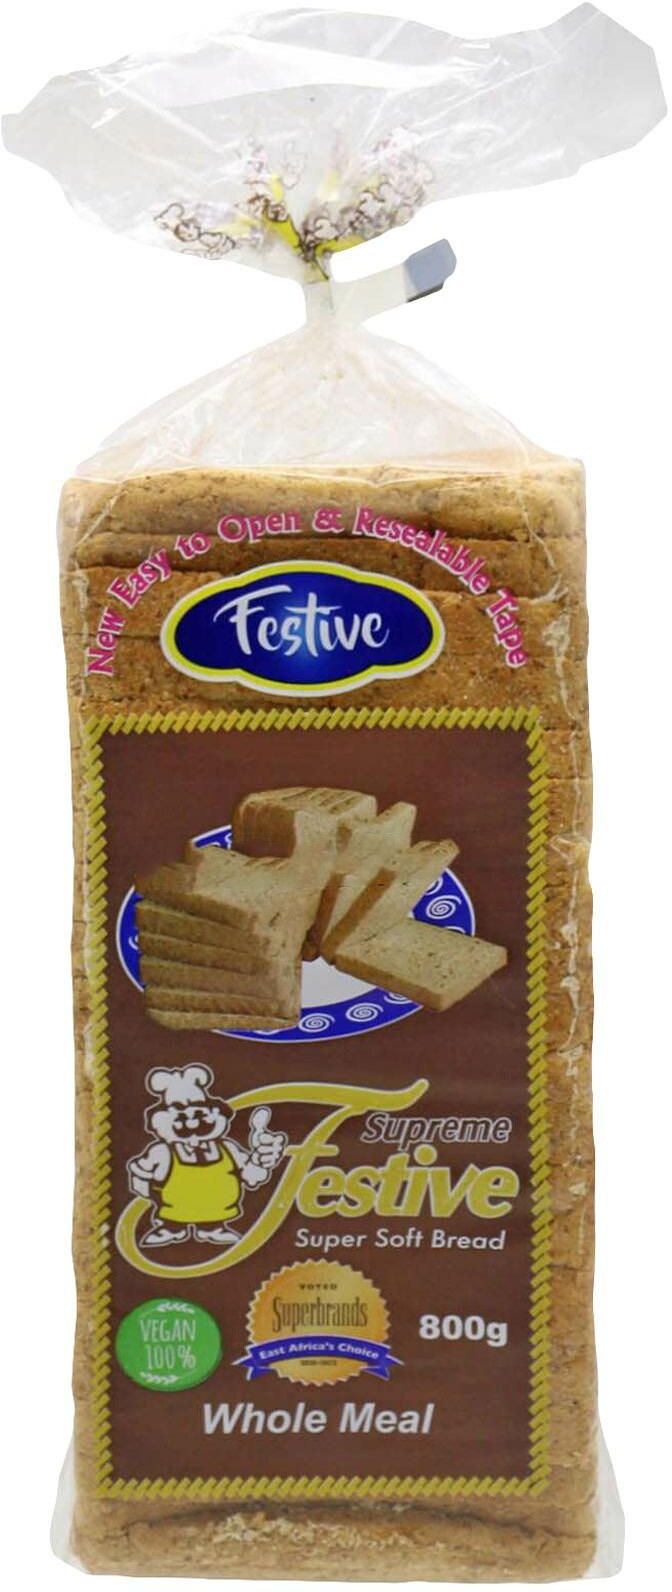 Festive Supreme Whole Meal Bread 800g